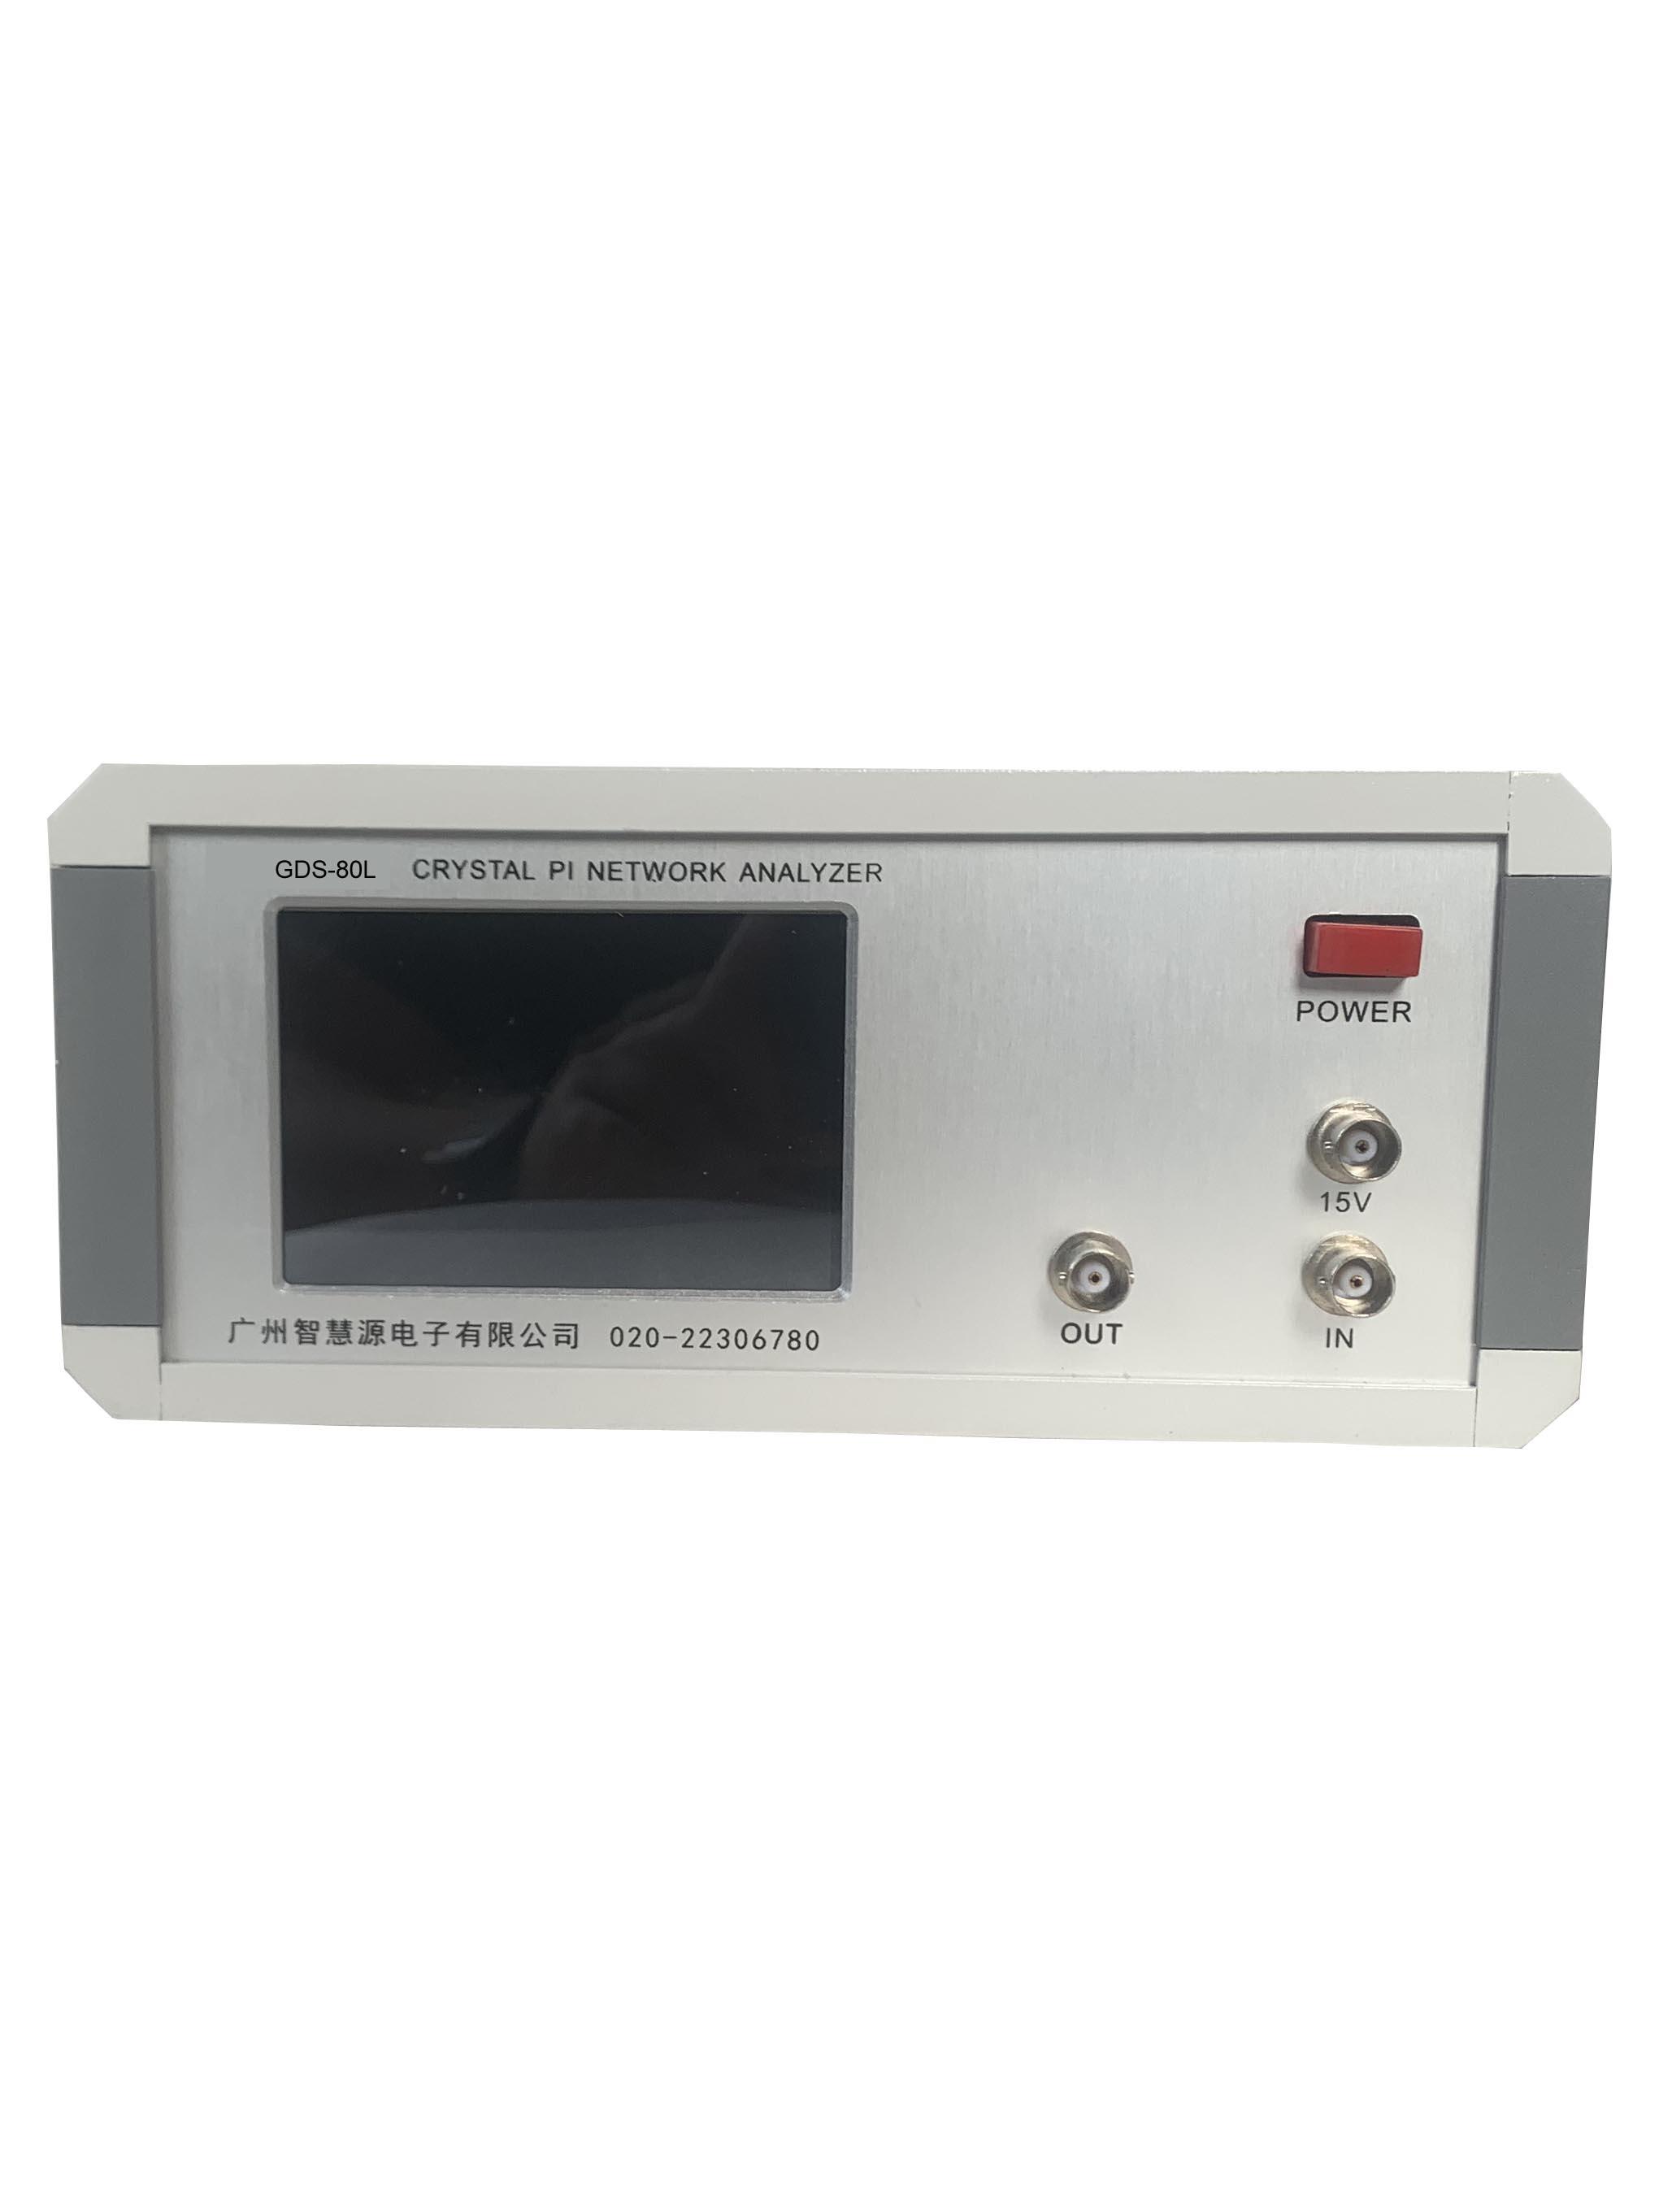 Zhyuan晶振频率测试仪GDS-80L